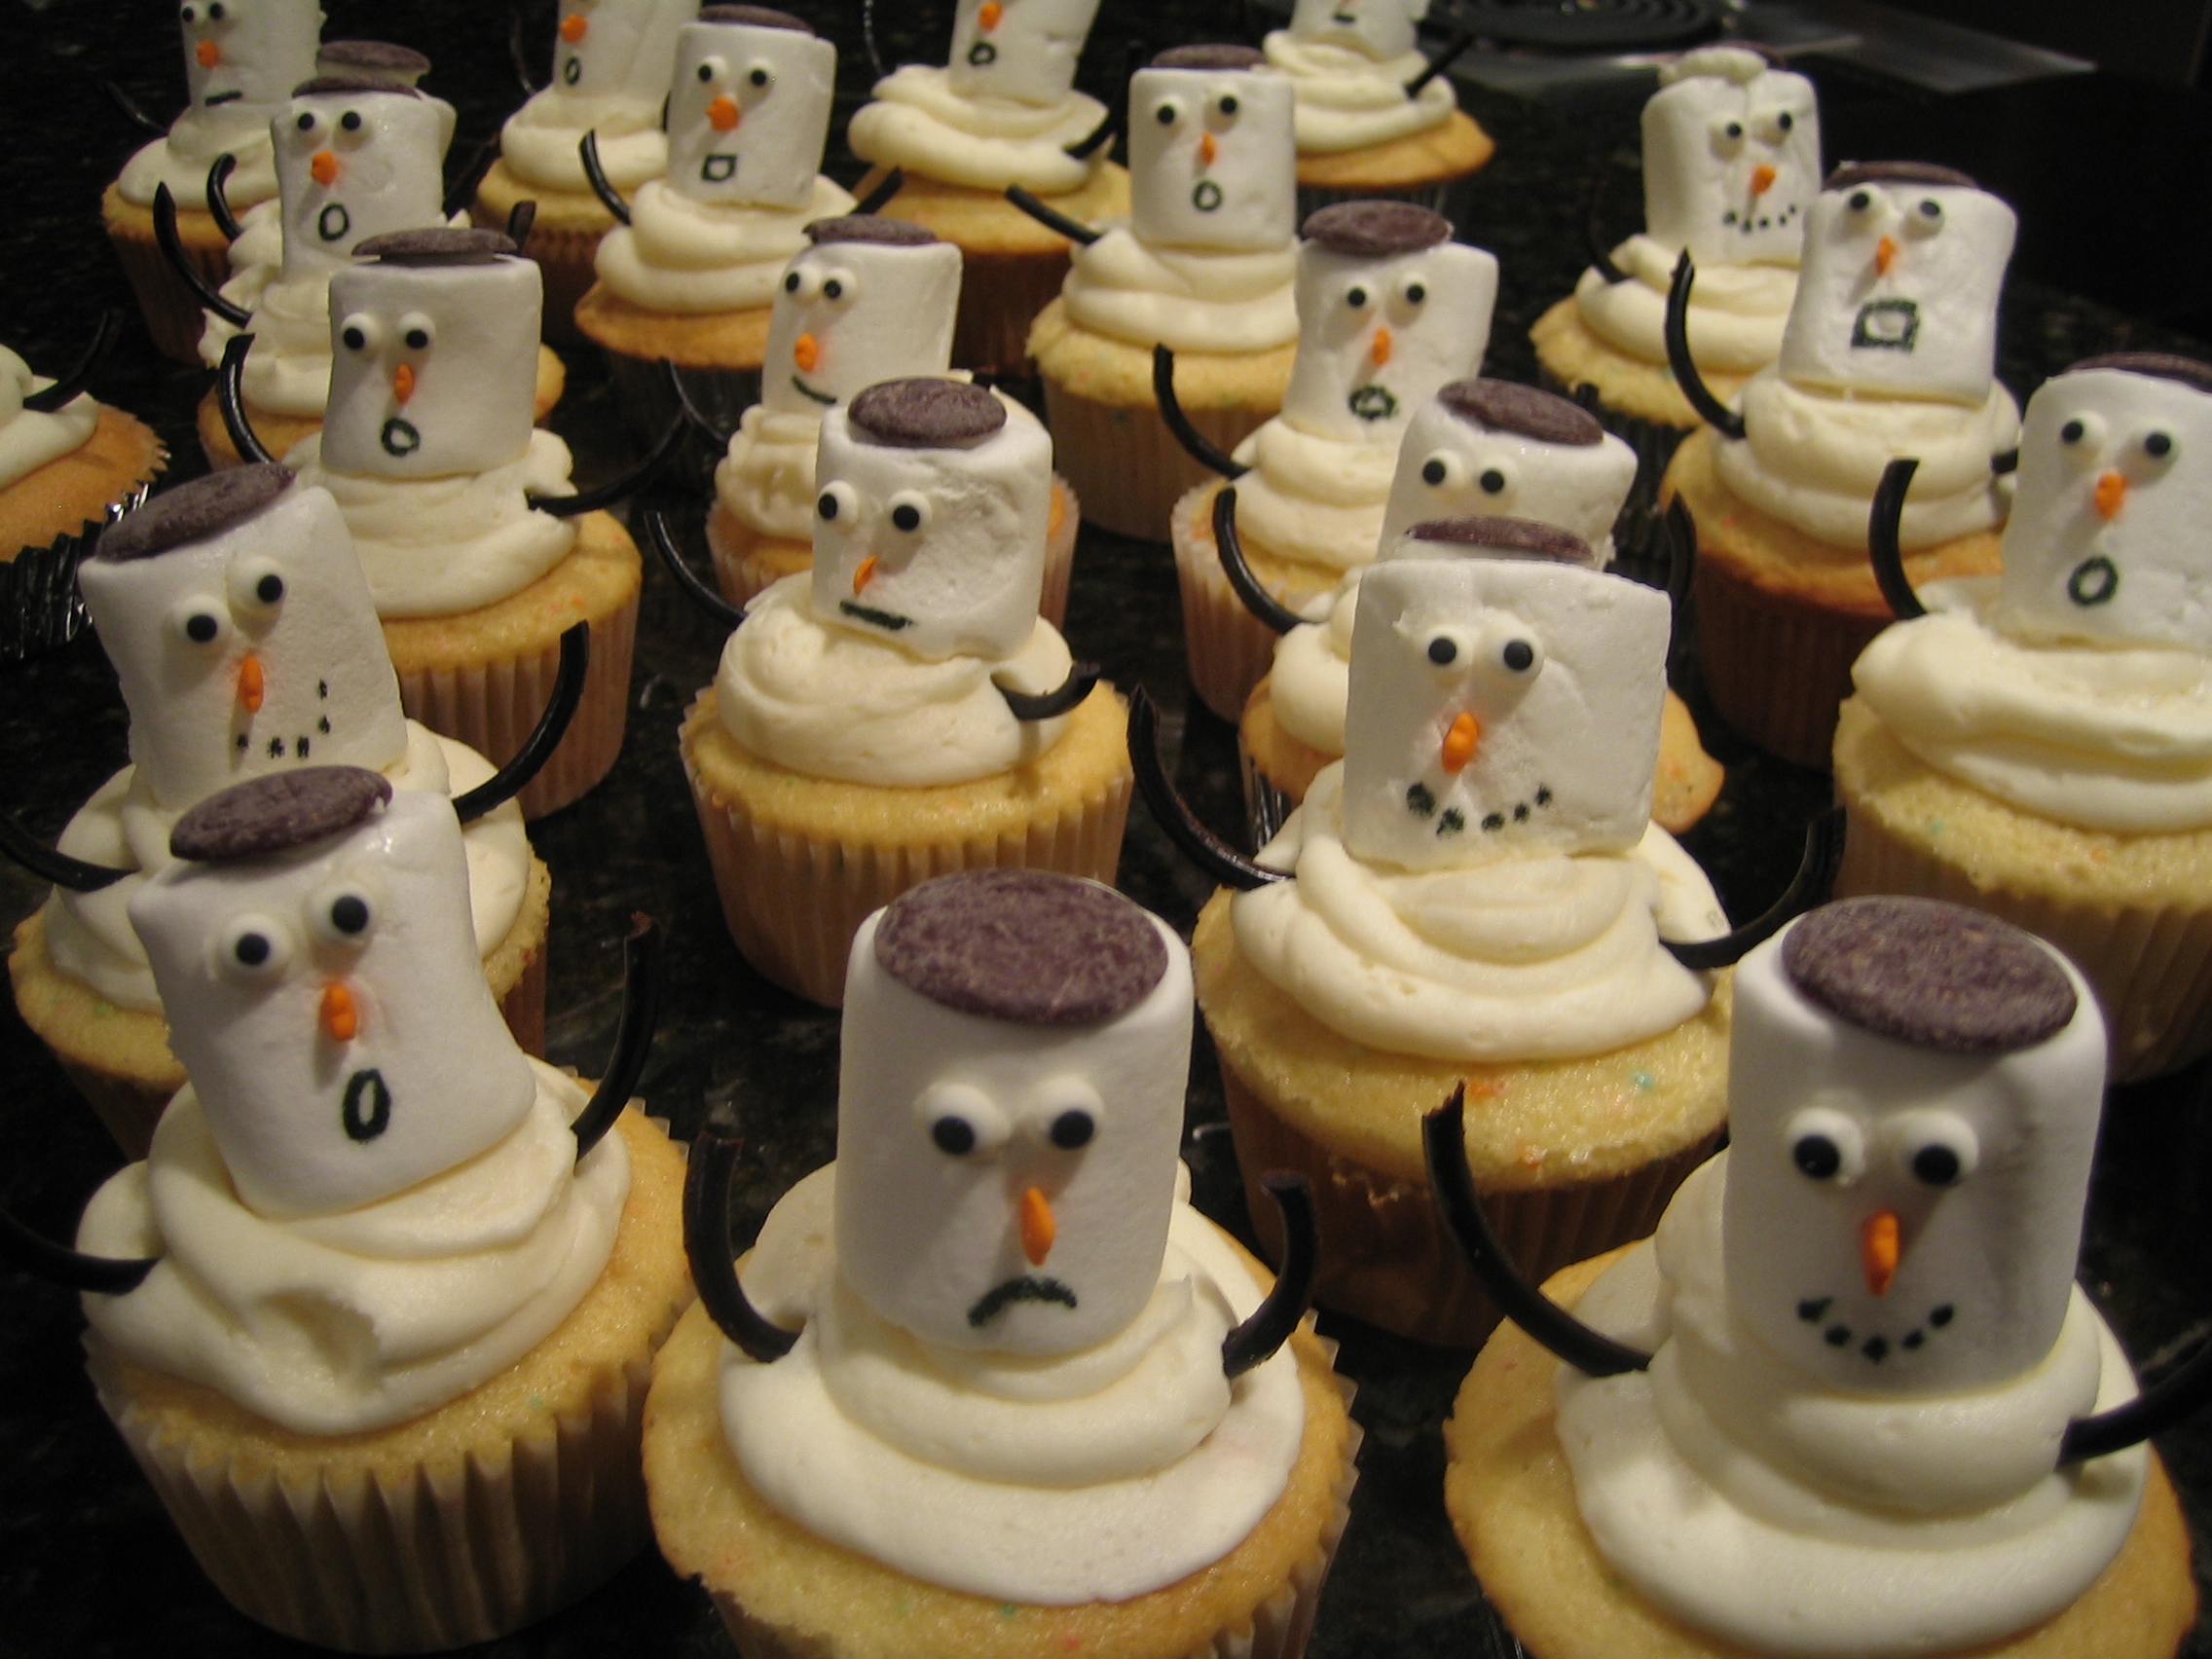 Melting Snowman Cupcakes • Sarahs Bake Studio